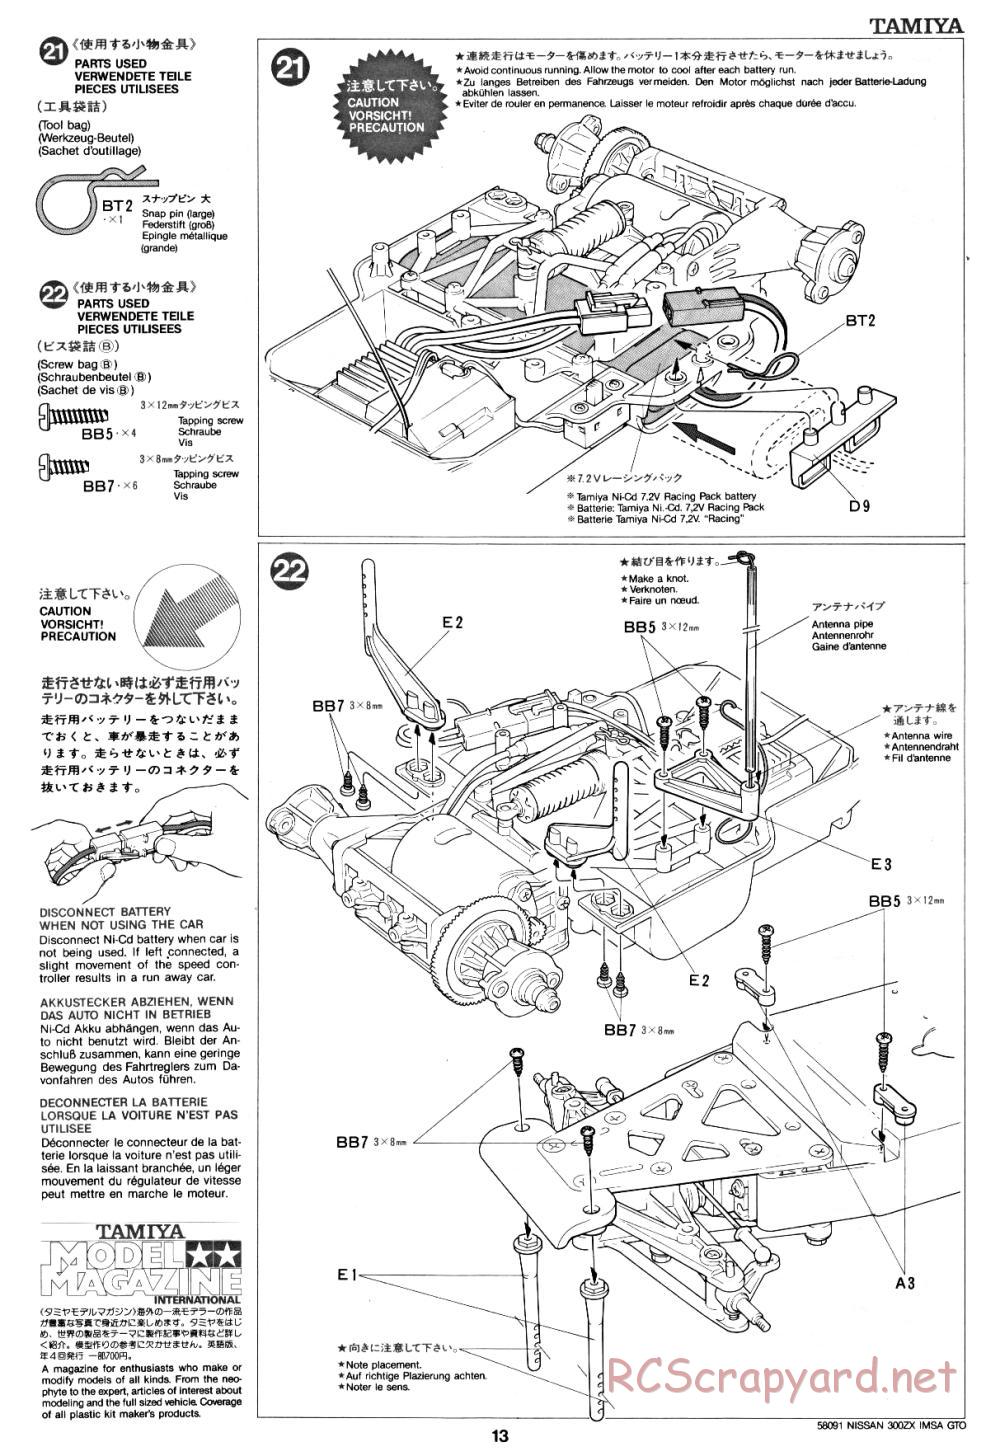 Tamiya - Nissan 300ZX IMSA GTO - 58091 - Manual - Page 13